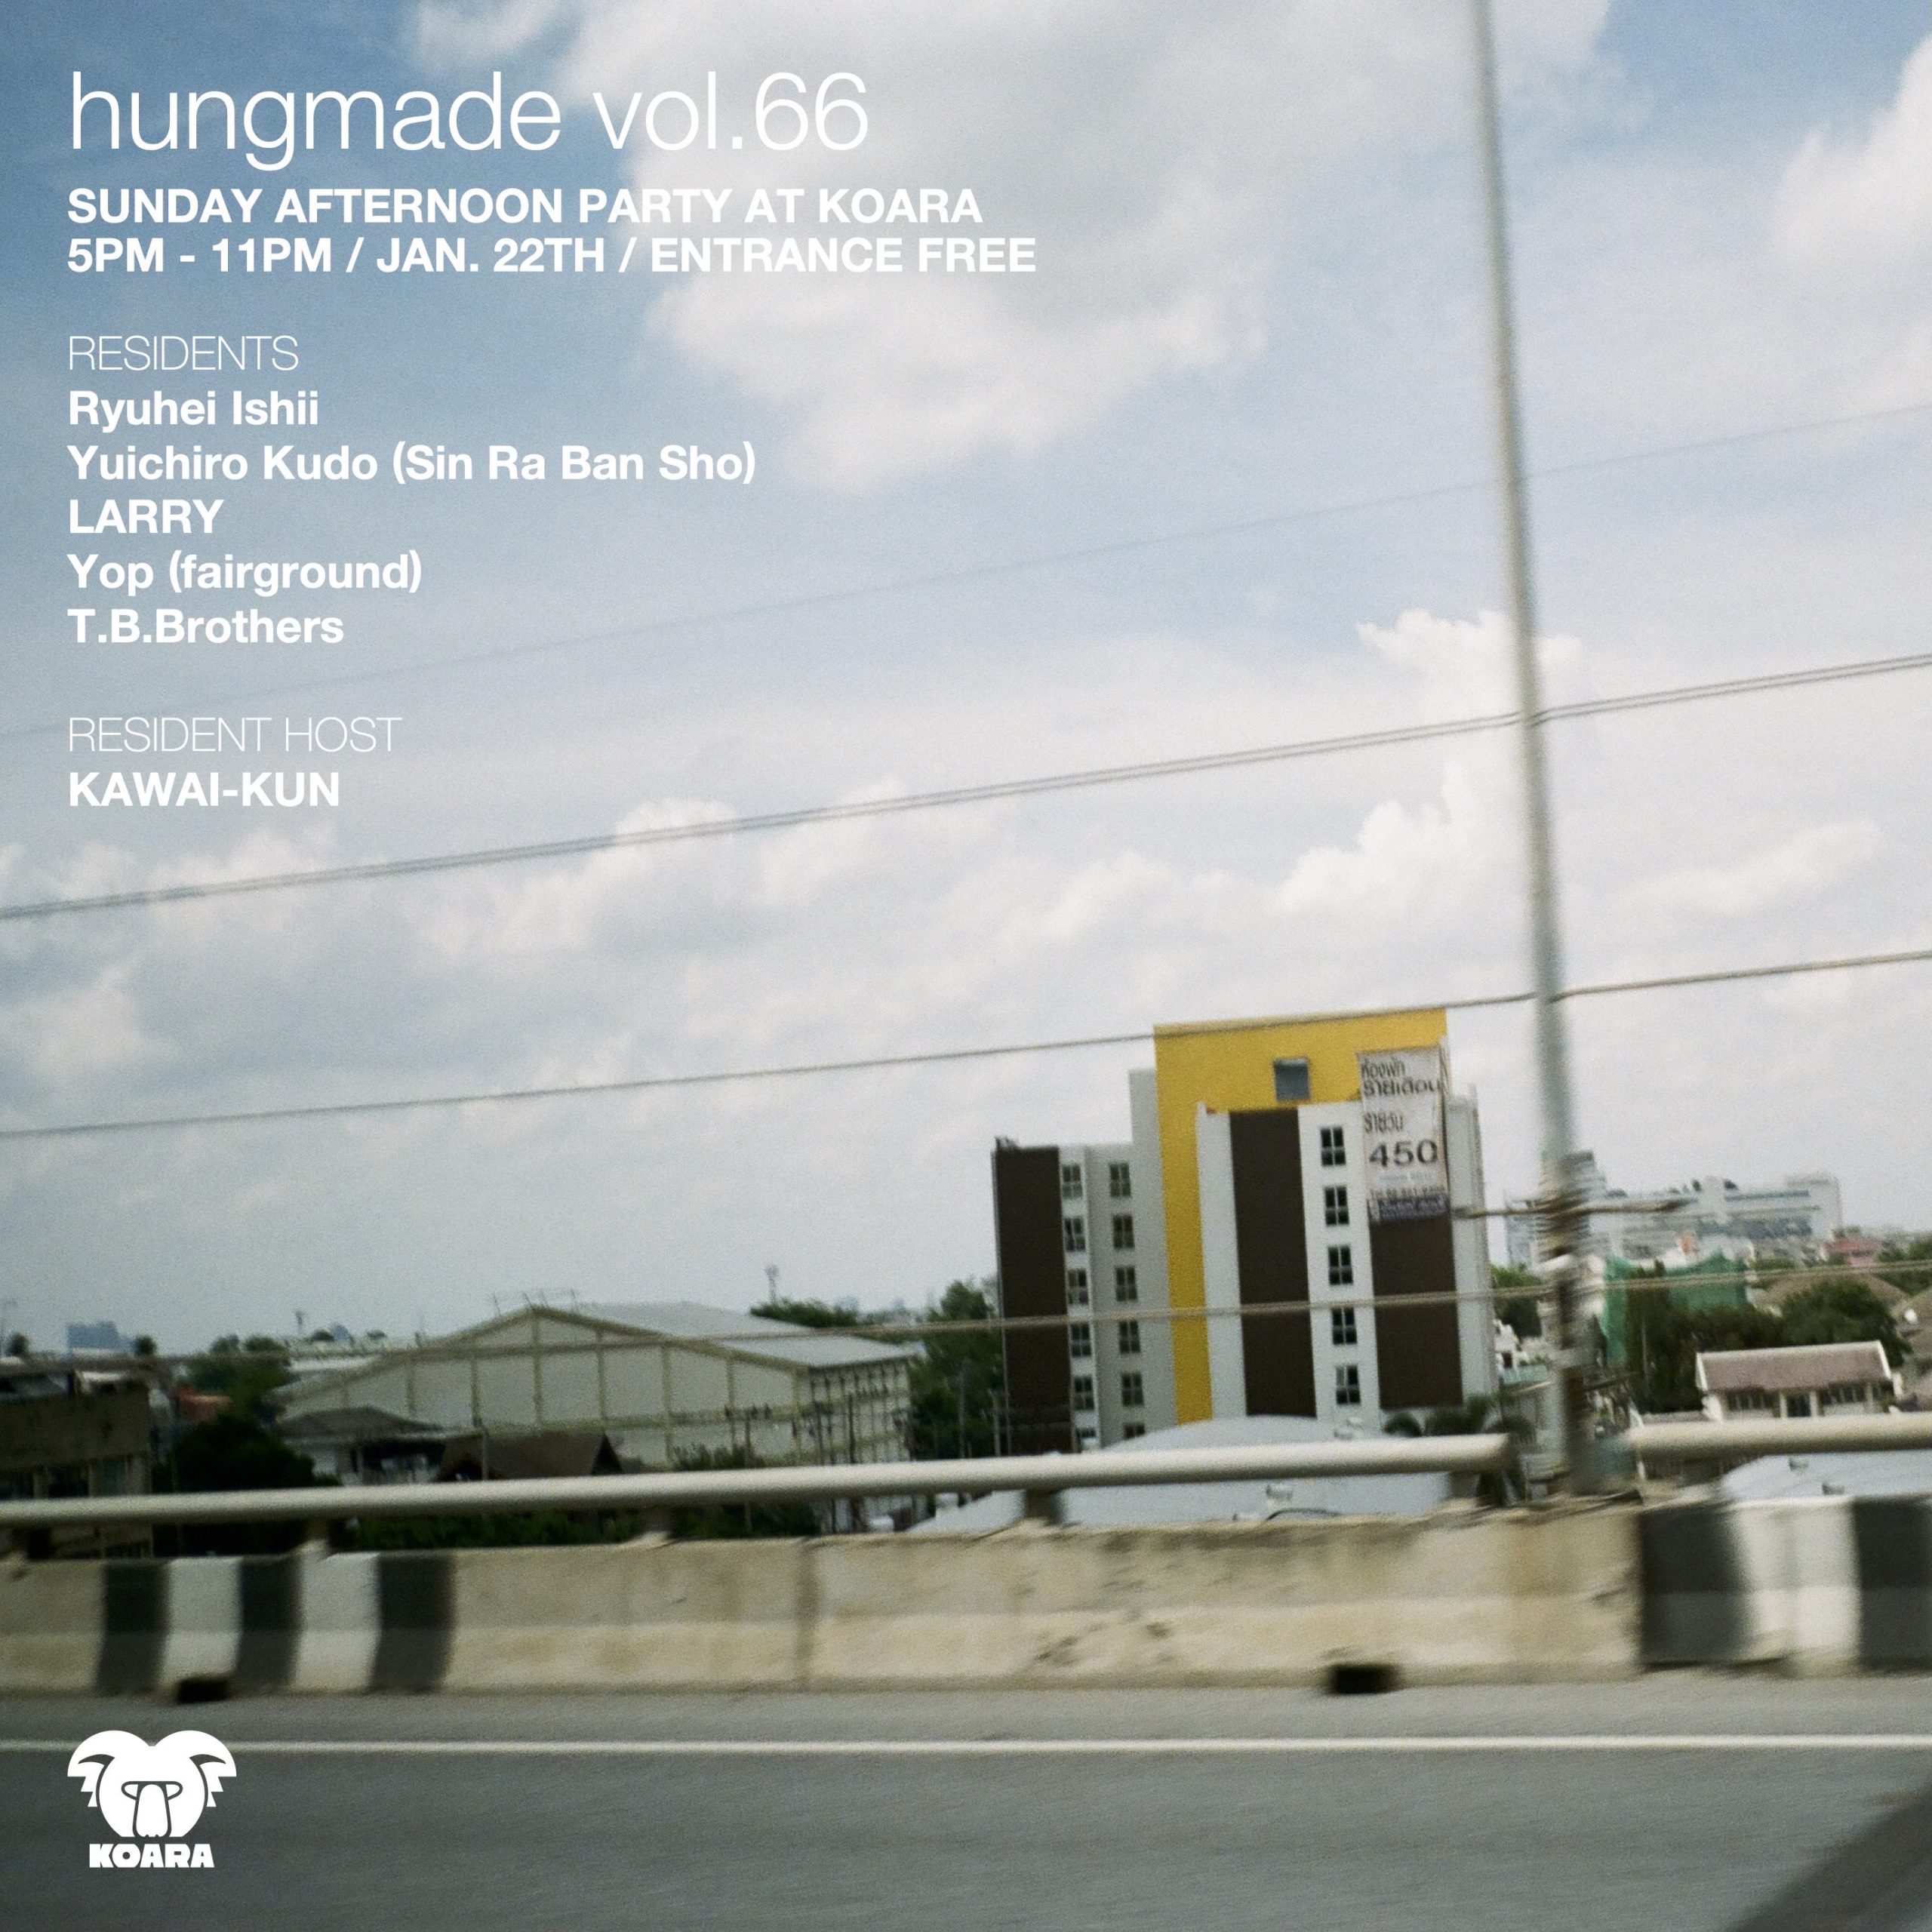 hungmade Vol.66 